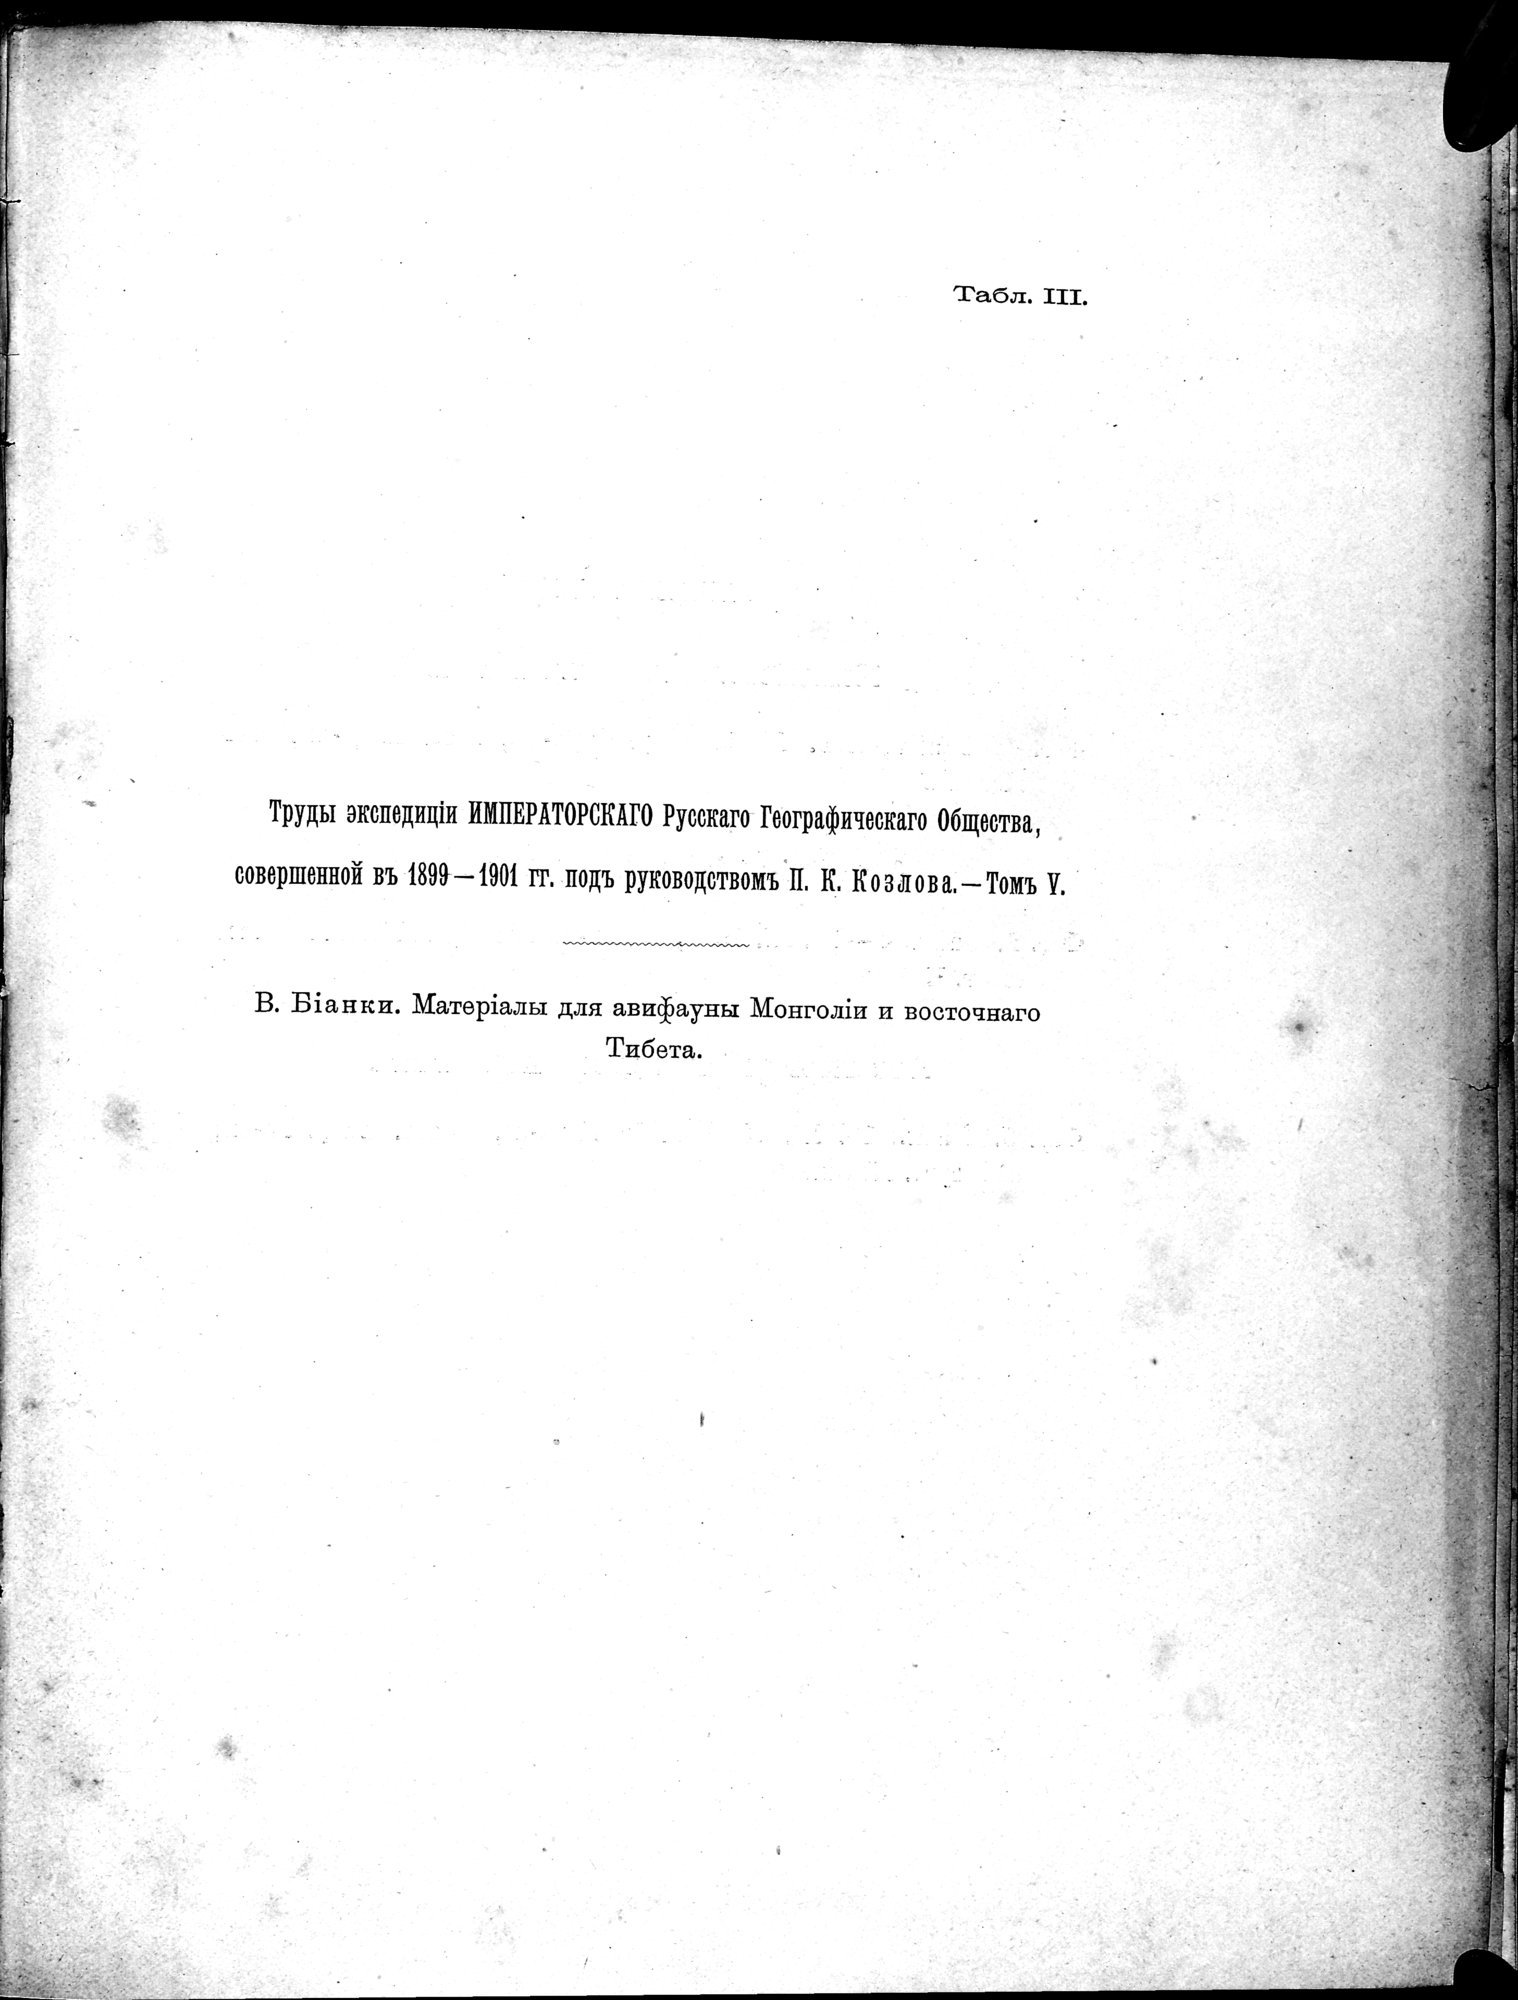 Mongoliia i Kam : vol.5 / Page 333 (Grayscale High Resolution Image)